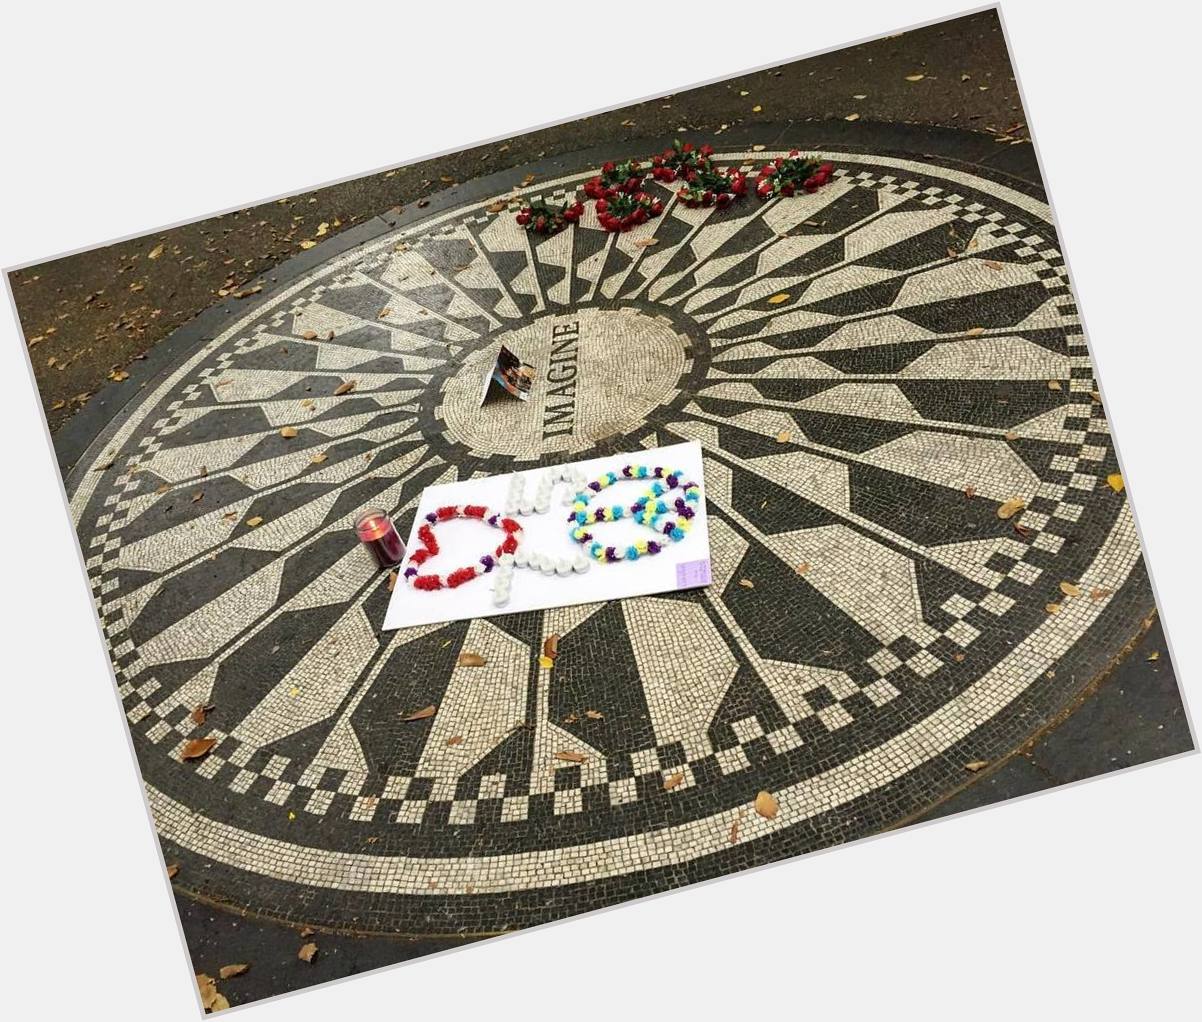 Imagine  . Happy 75th birthday John Lennon. The Imagine mosaic is a memorial to Lennon wi 